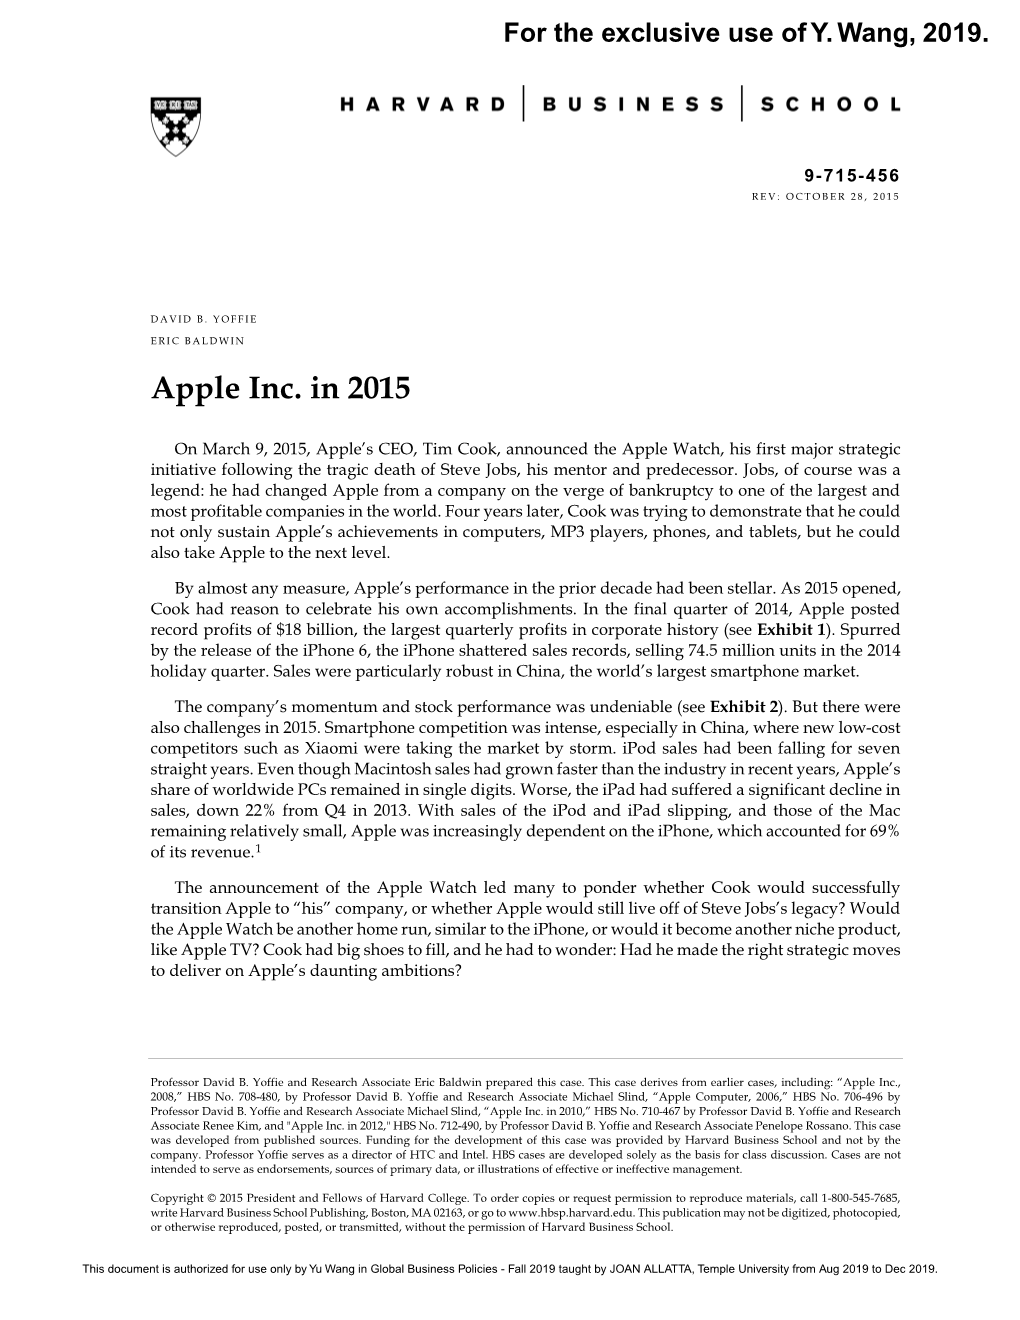 Apple Inc. in 2015